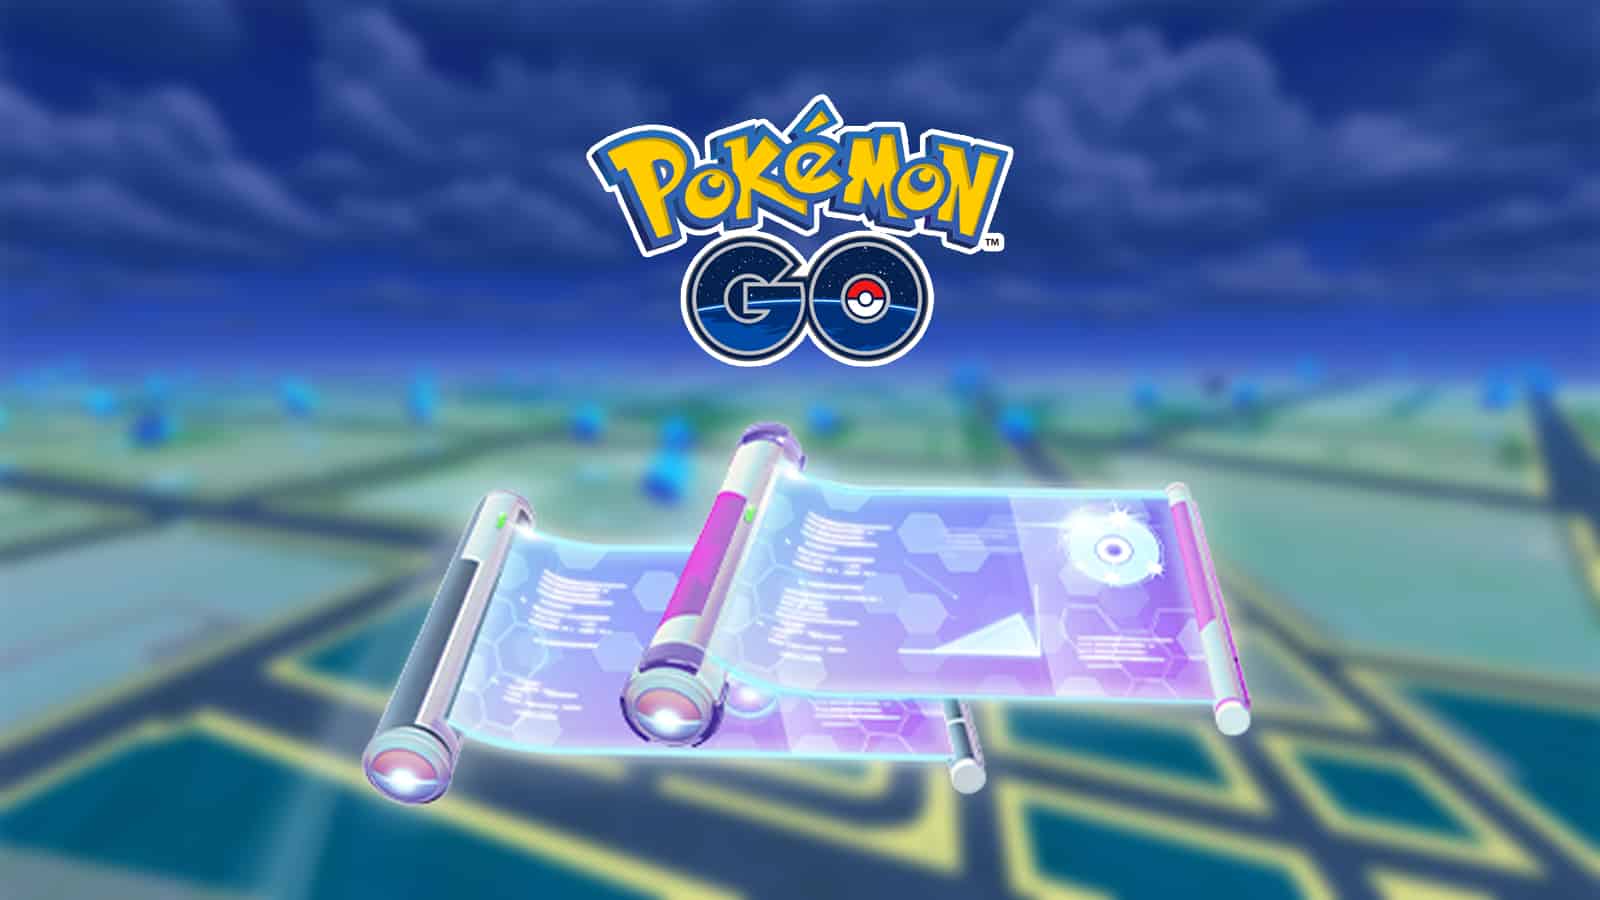 Best Pokémon to Evolve, TM, and Power-up to beat Raid Bosses in Pokémon Go